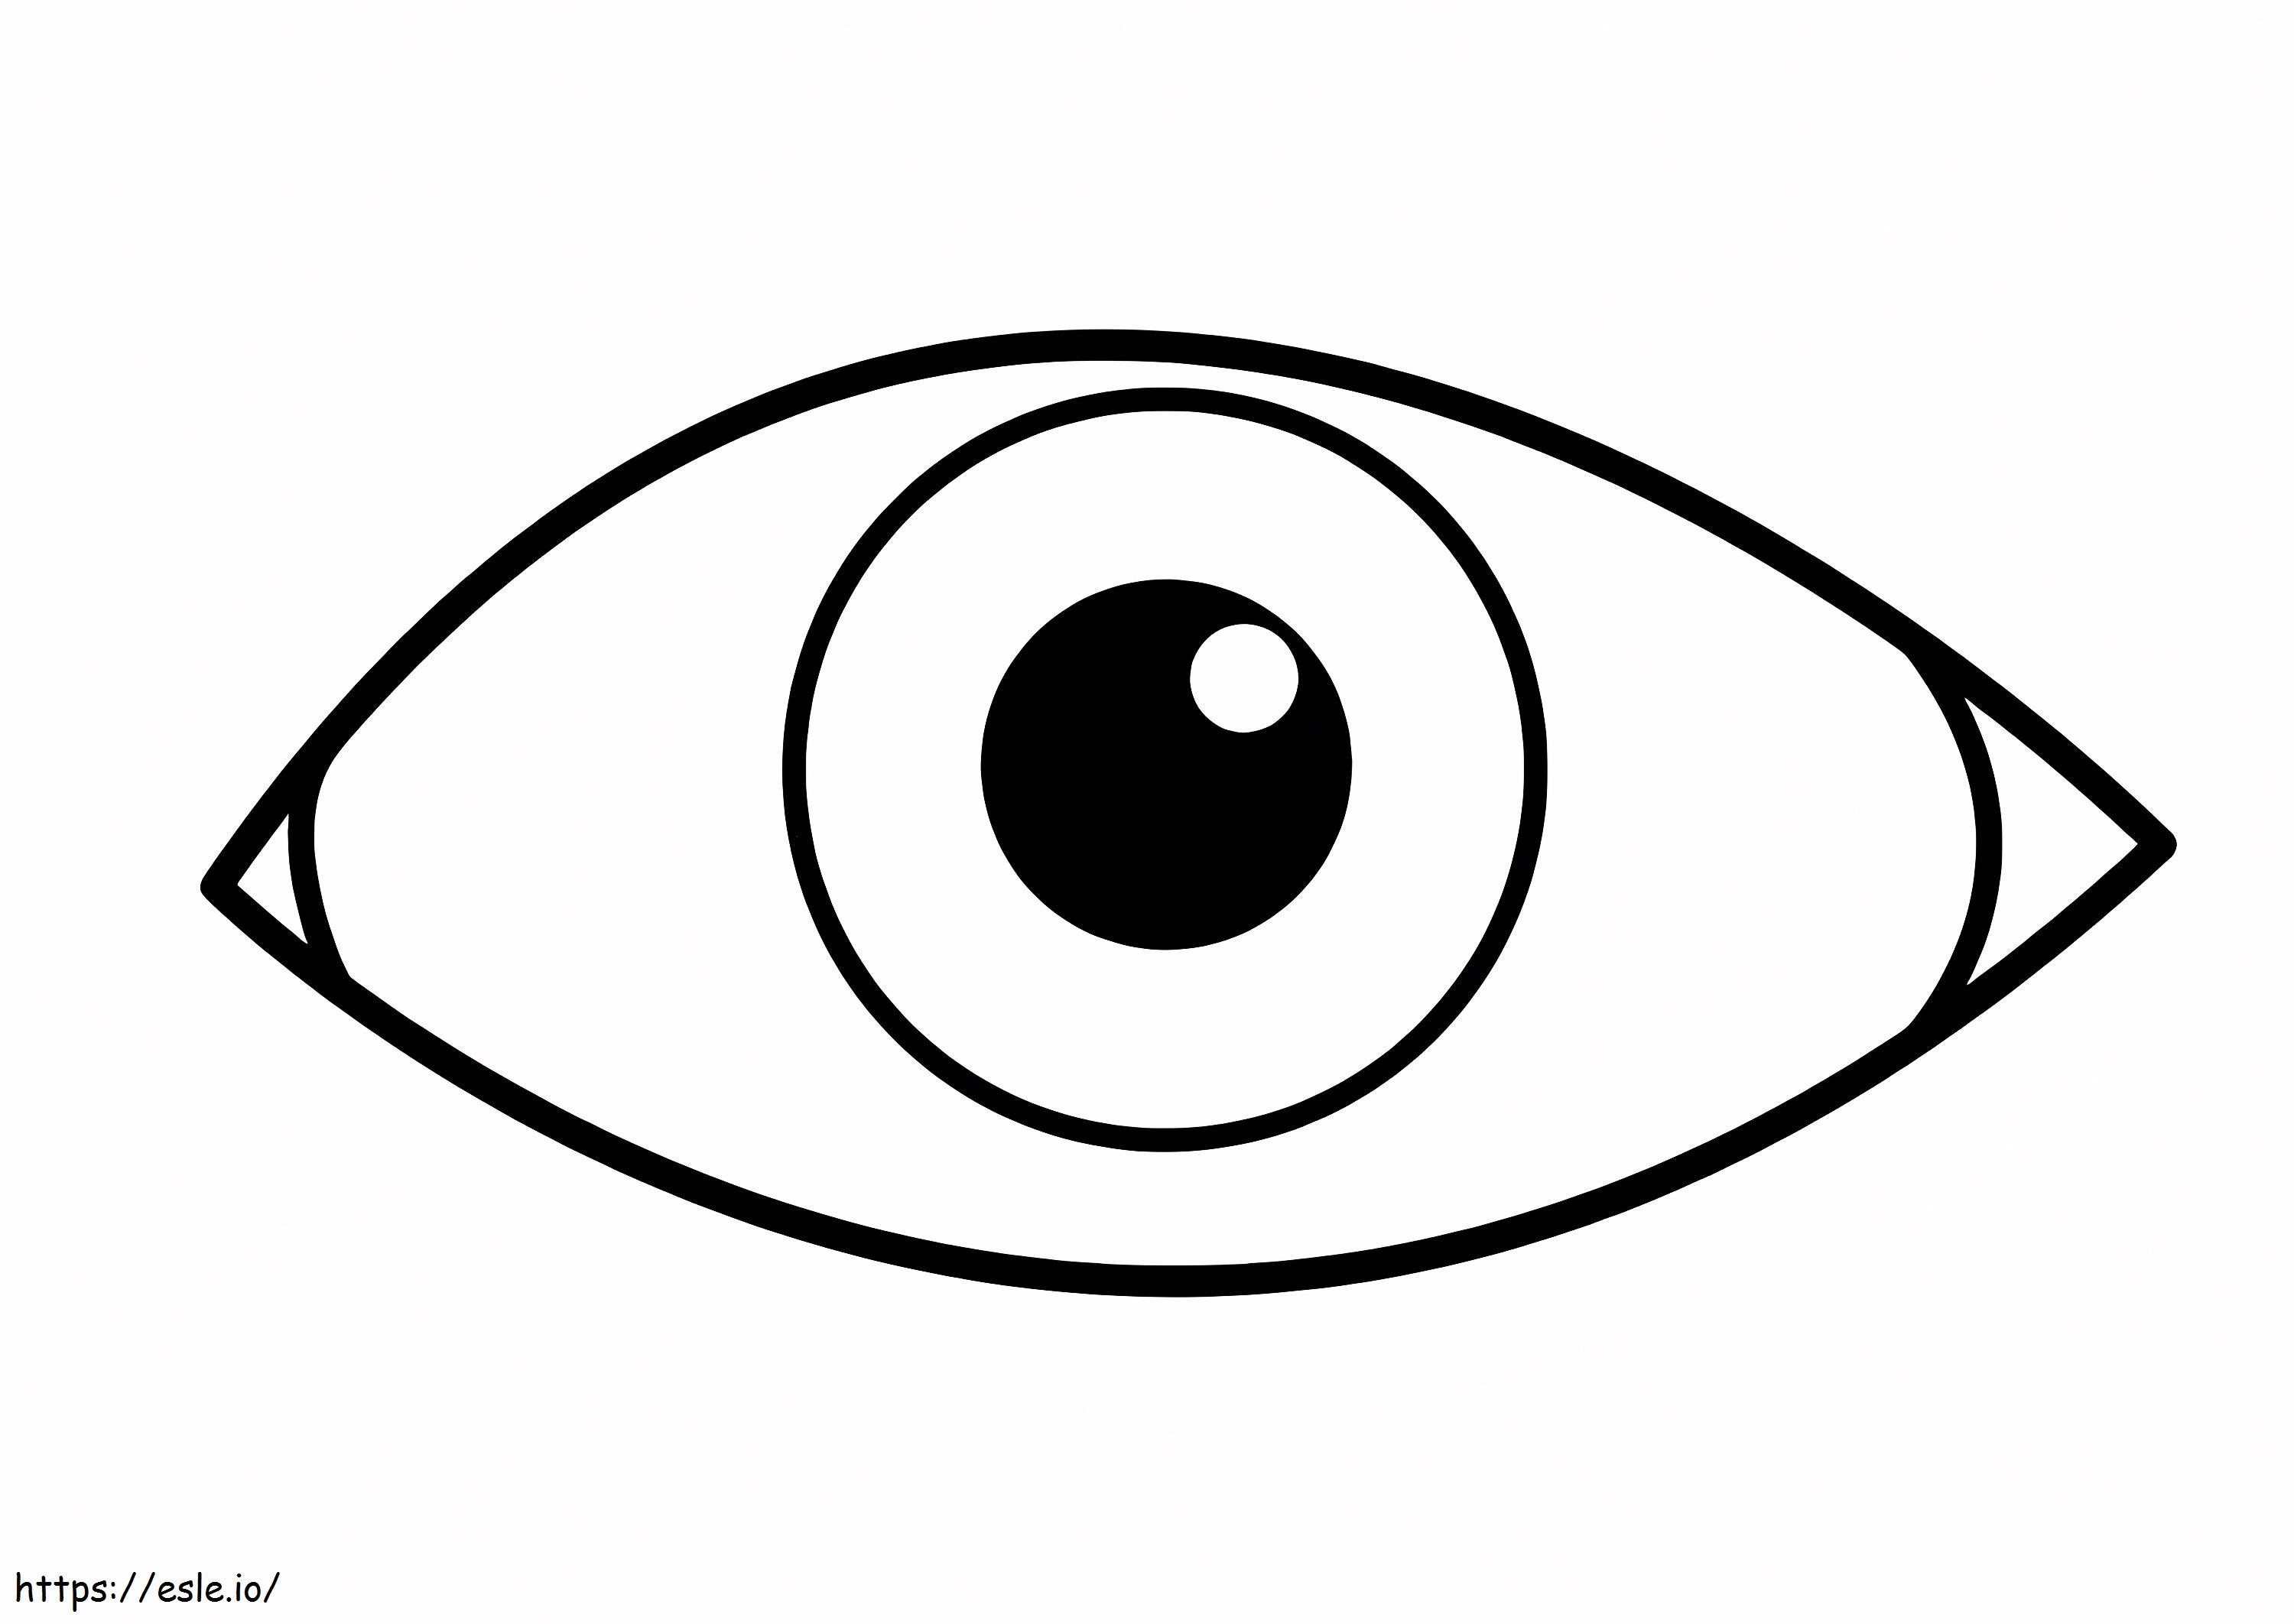 Occhio umano 1 da colorare